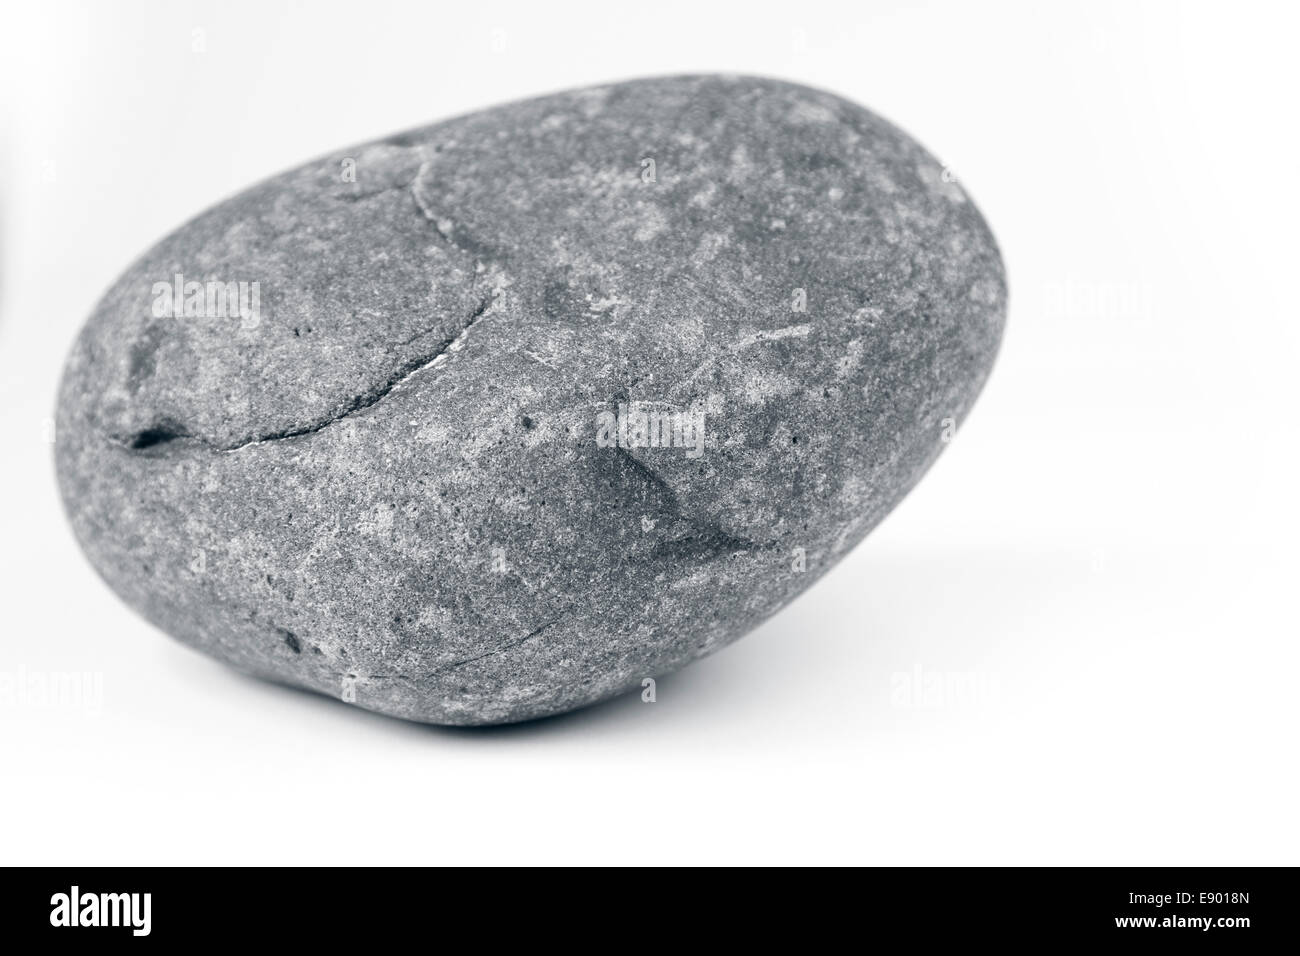 Closeup of one rock on plain background Stock Photo